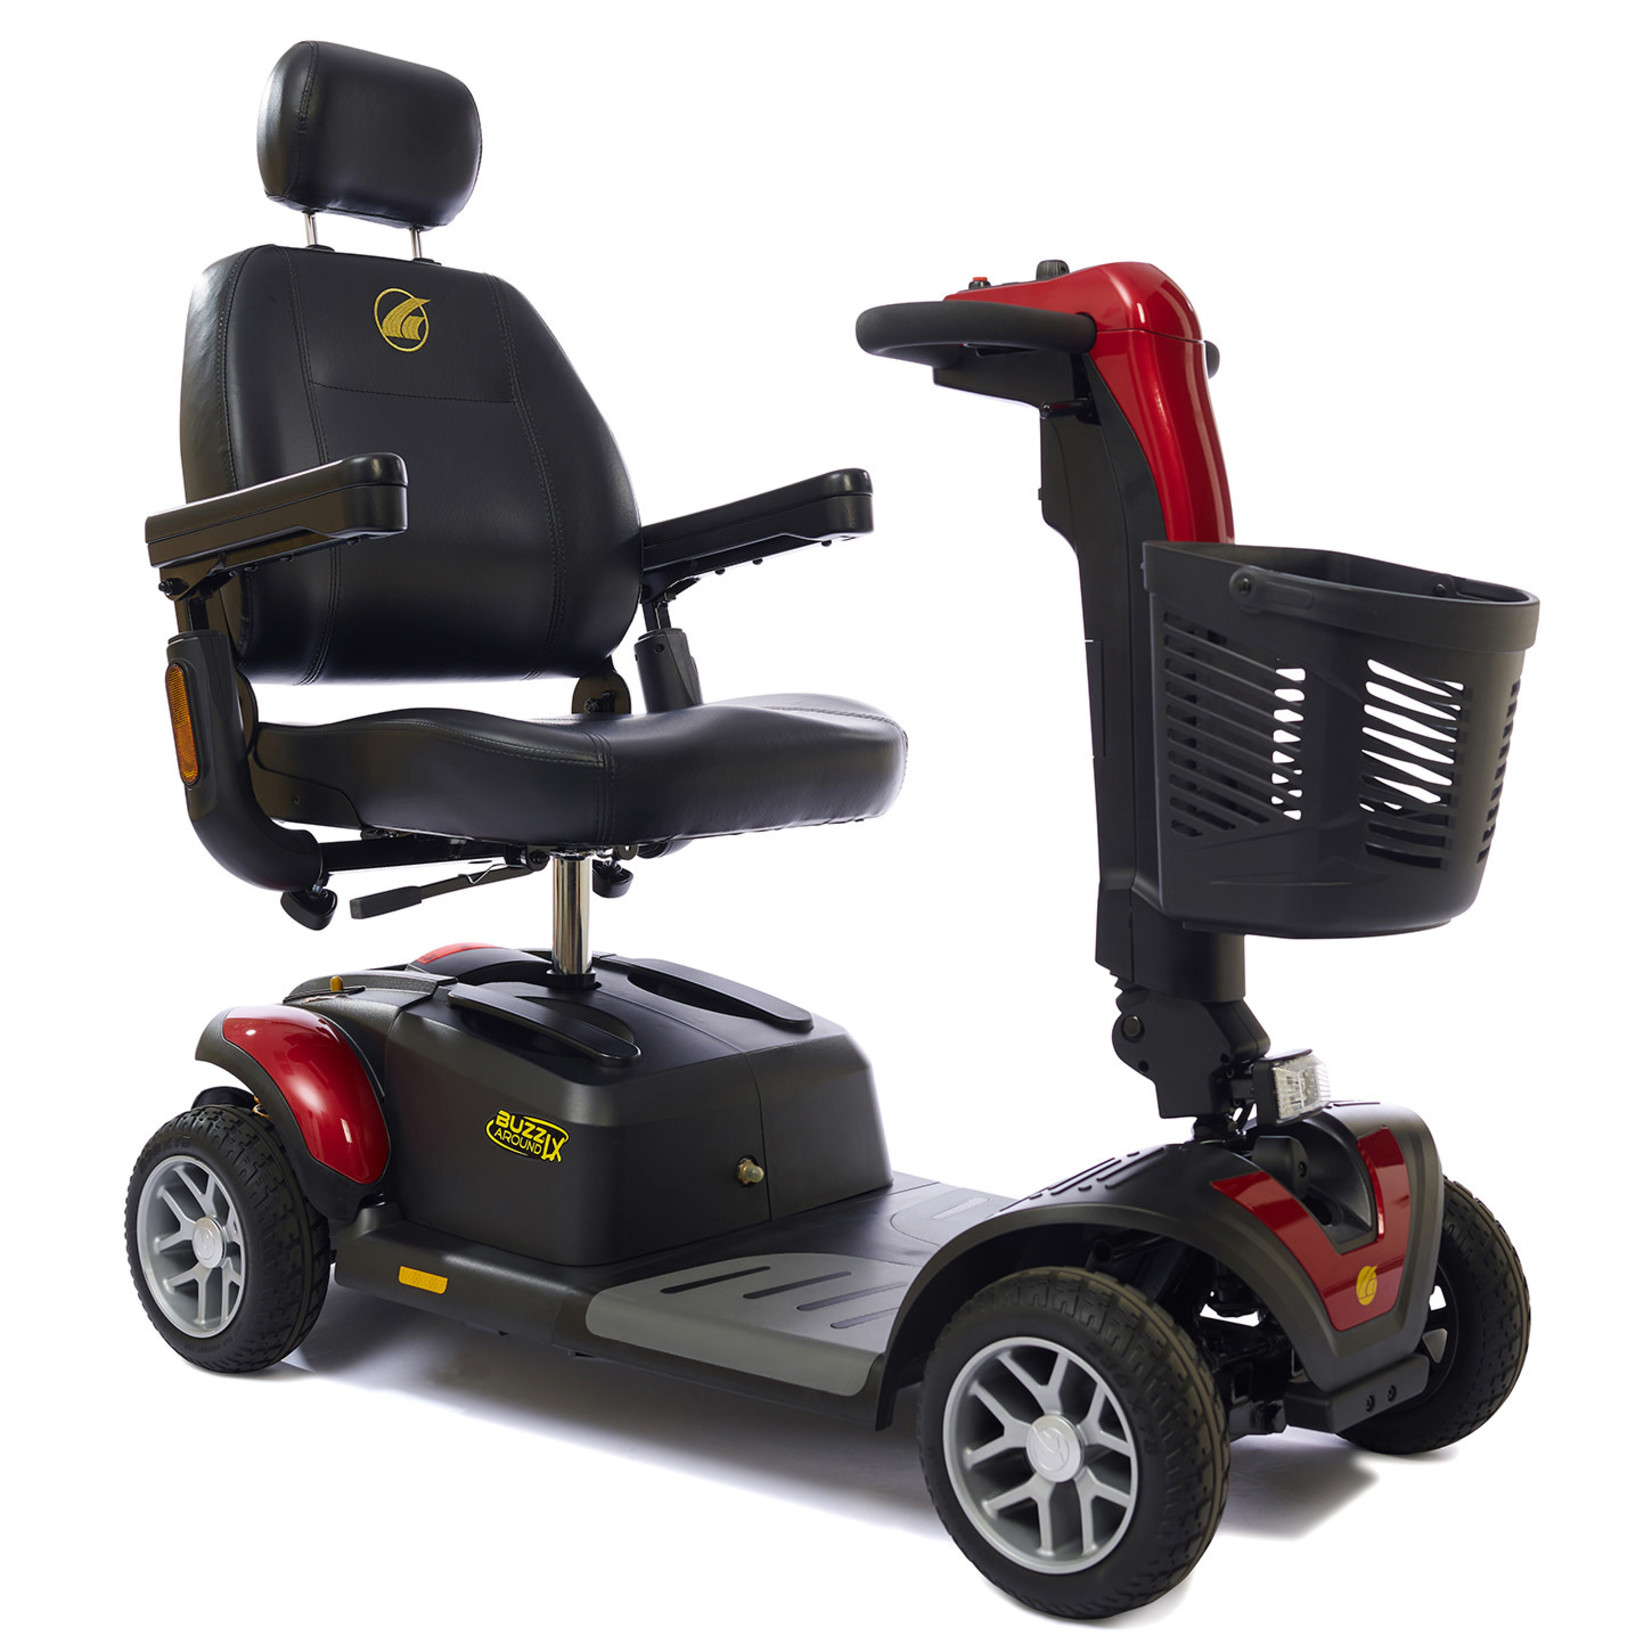 Golden Buzzaround LX 4-Wheel Mobility Scooter